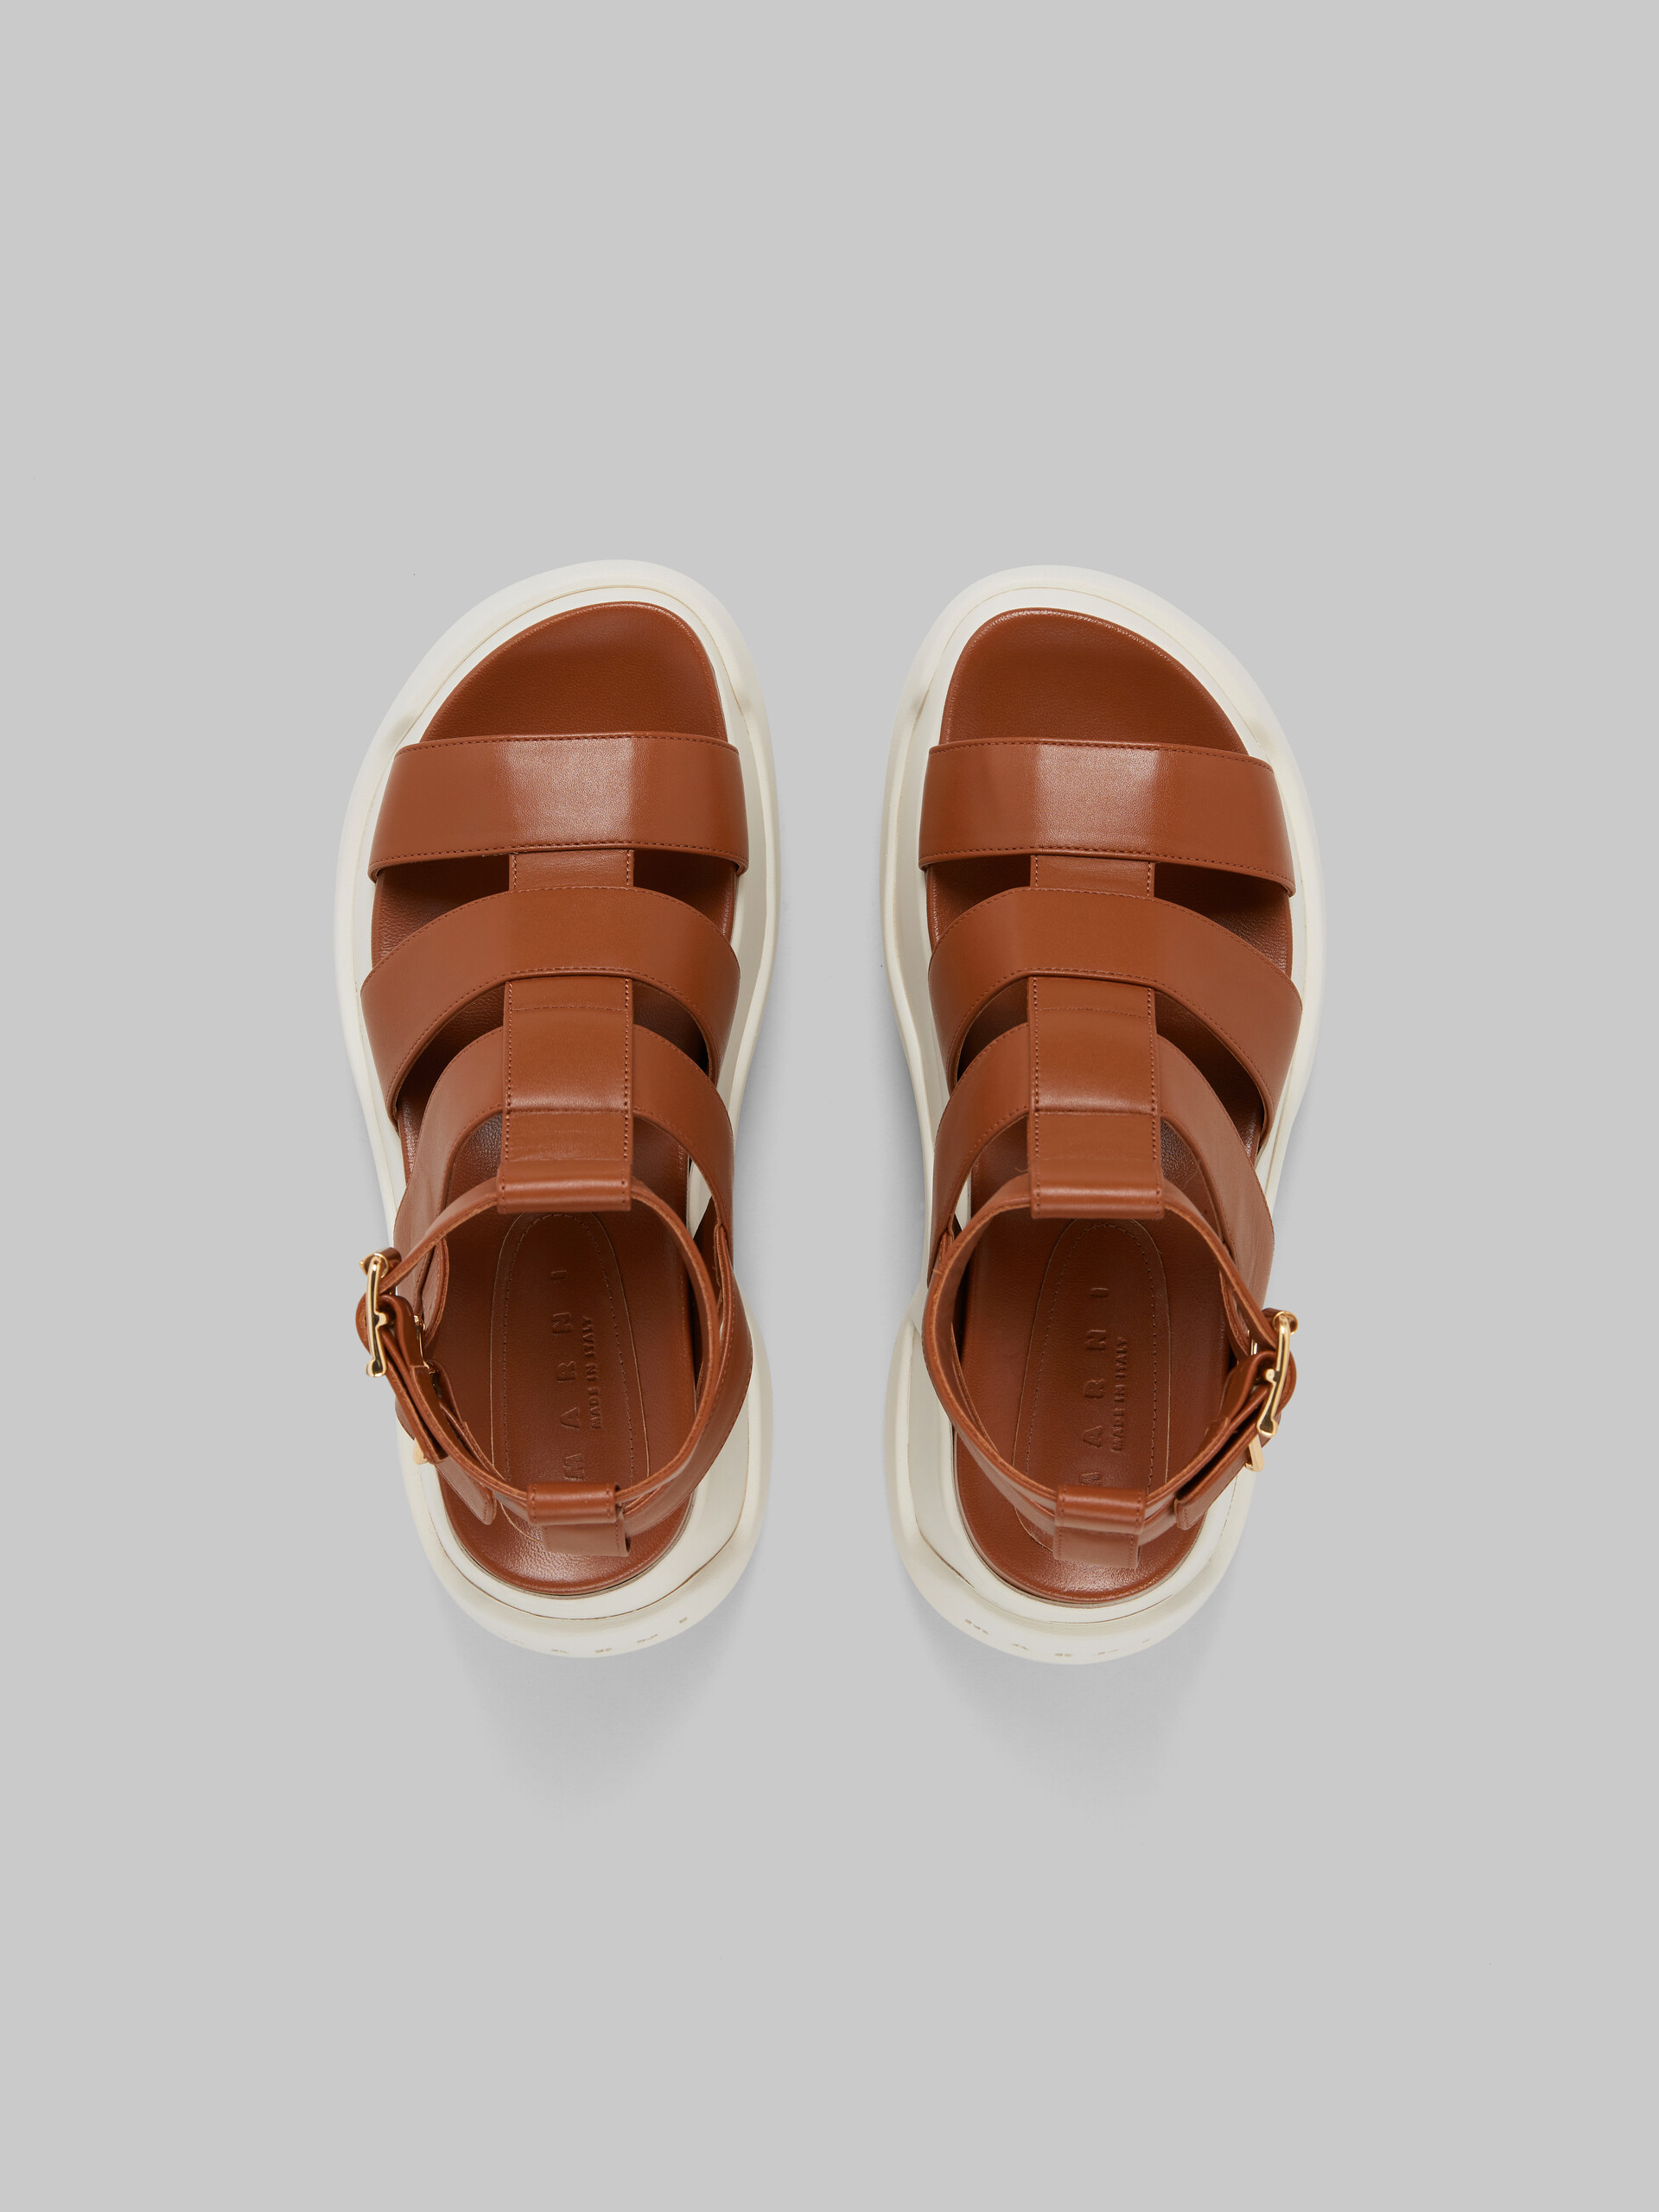 Brown leather Aras 23 gladiator sandal - Sandals - Image 4